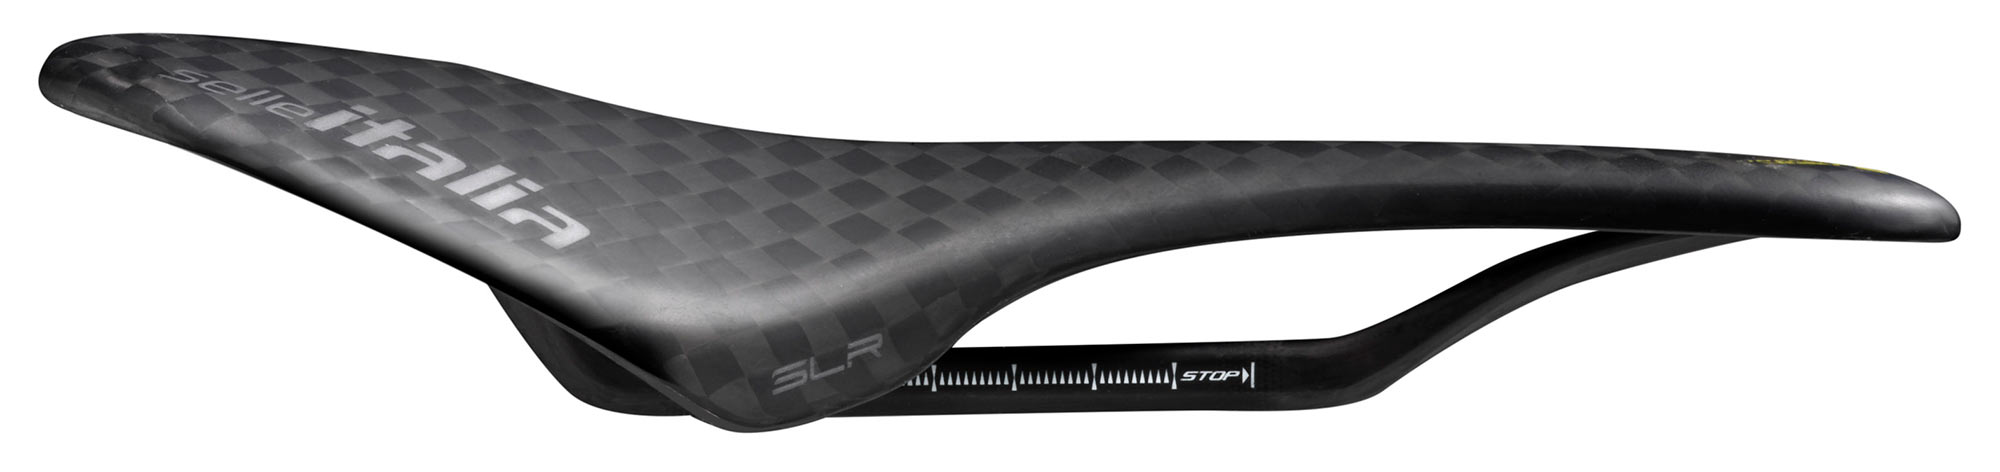 full carbon fiber selle italia slr boost tekno super flow road bike saddle shown from side